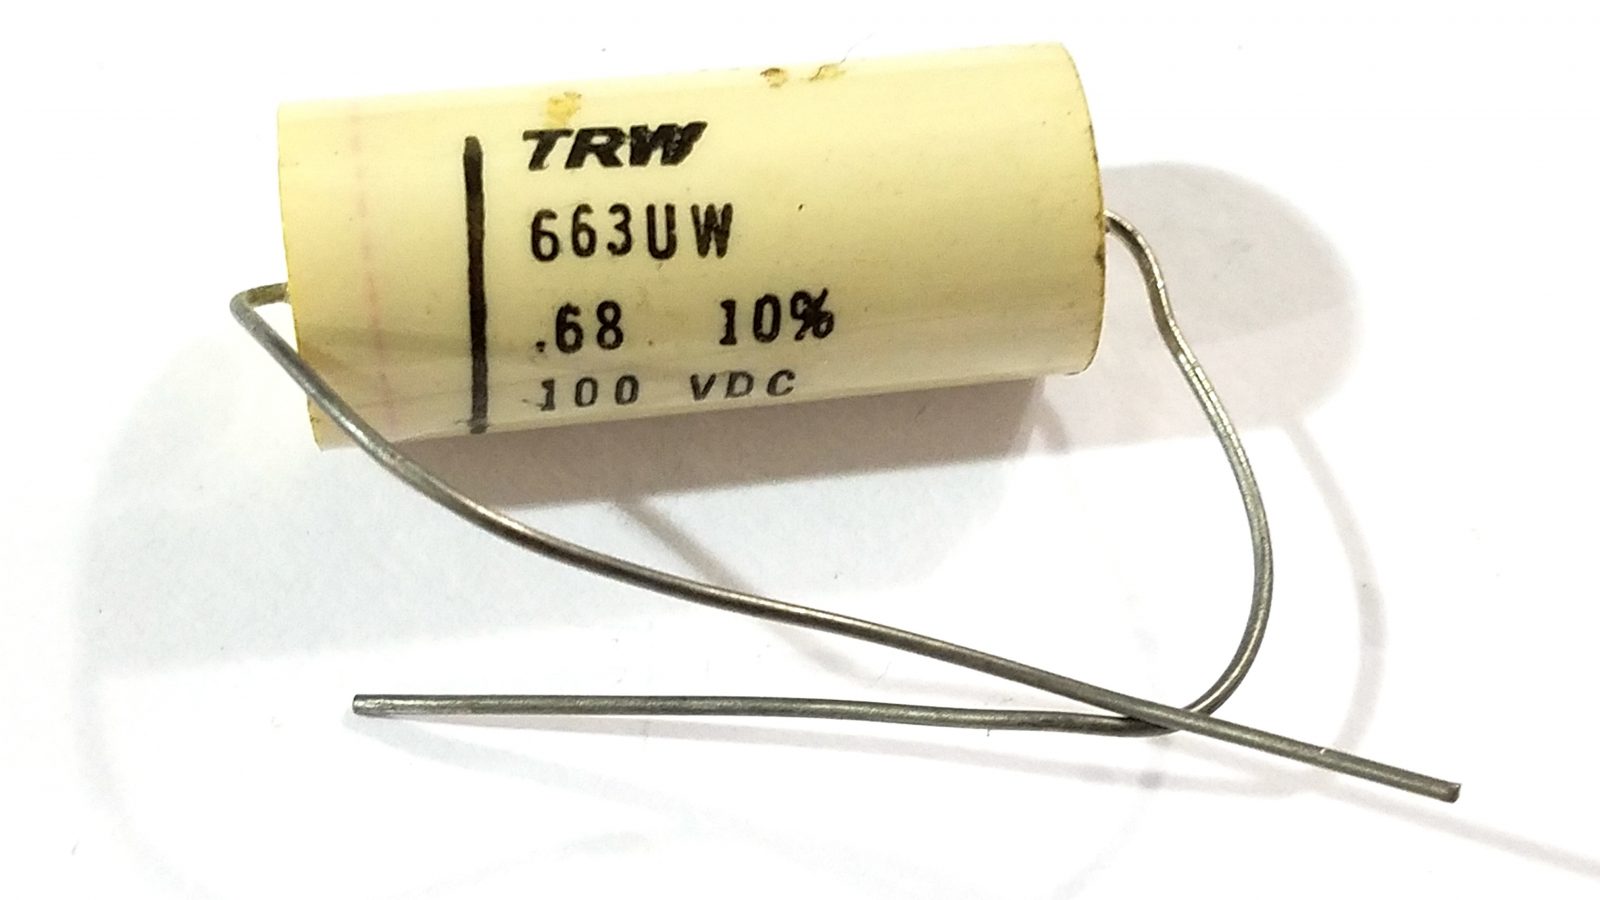 TRW 663UW .68, 10%, 100V Capacitor